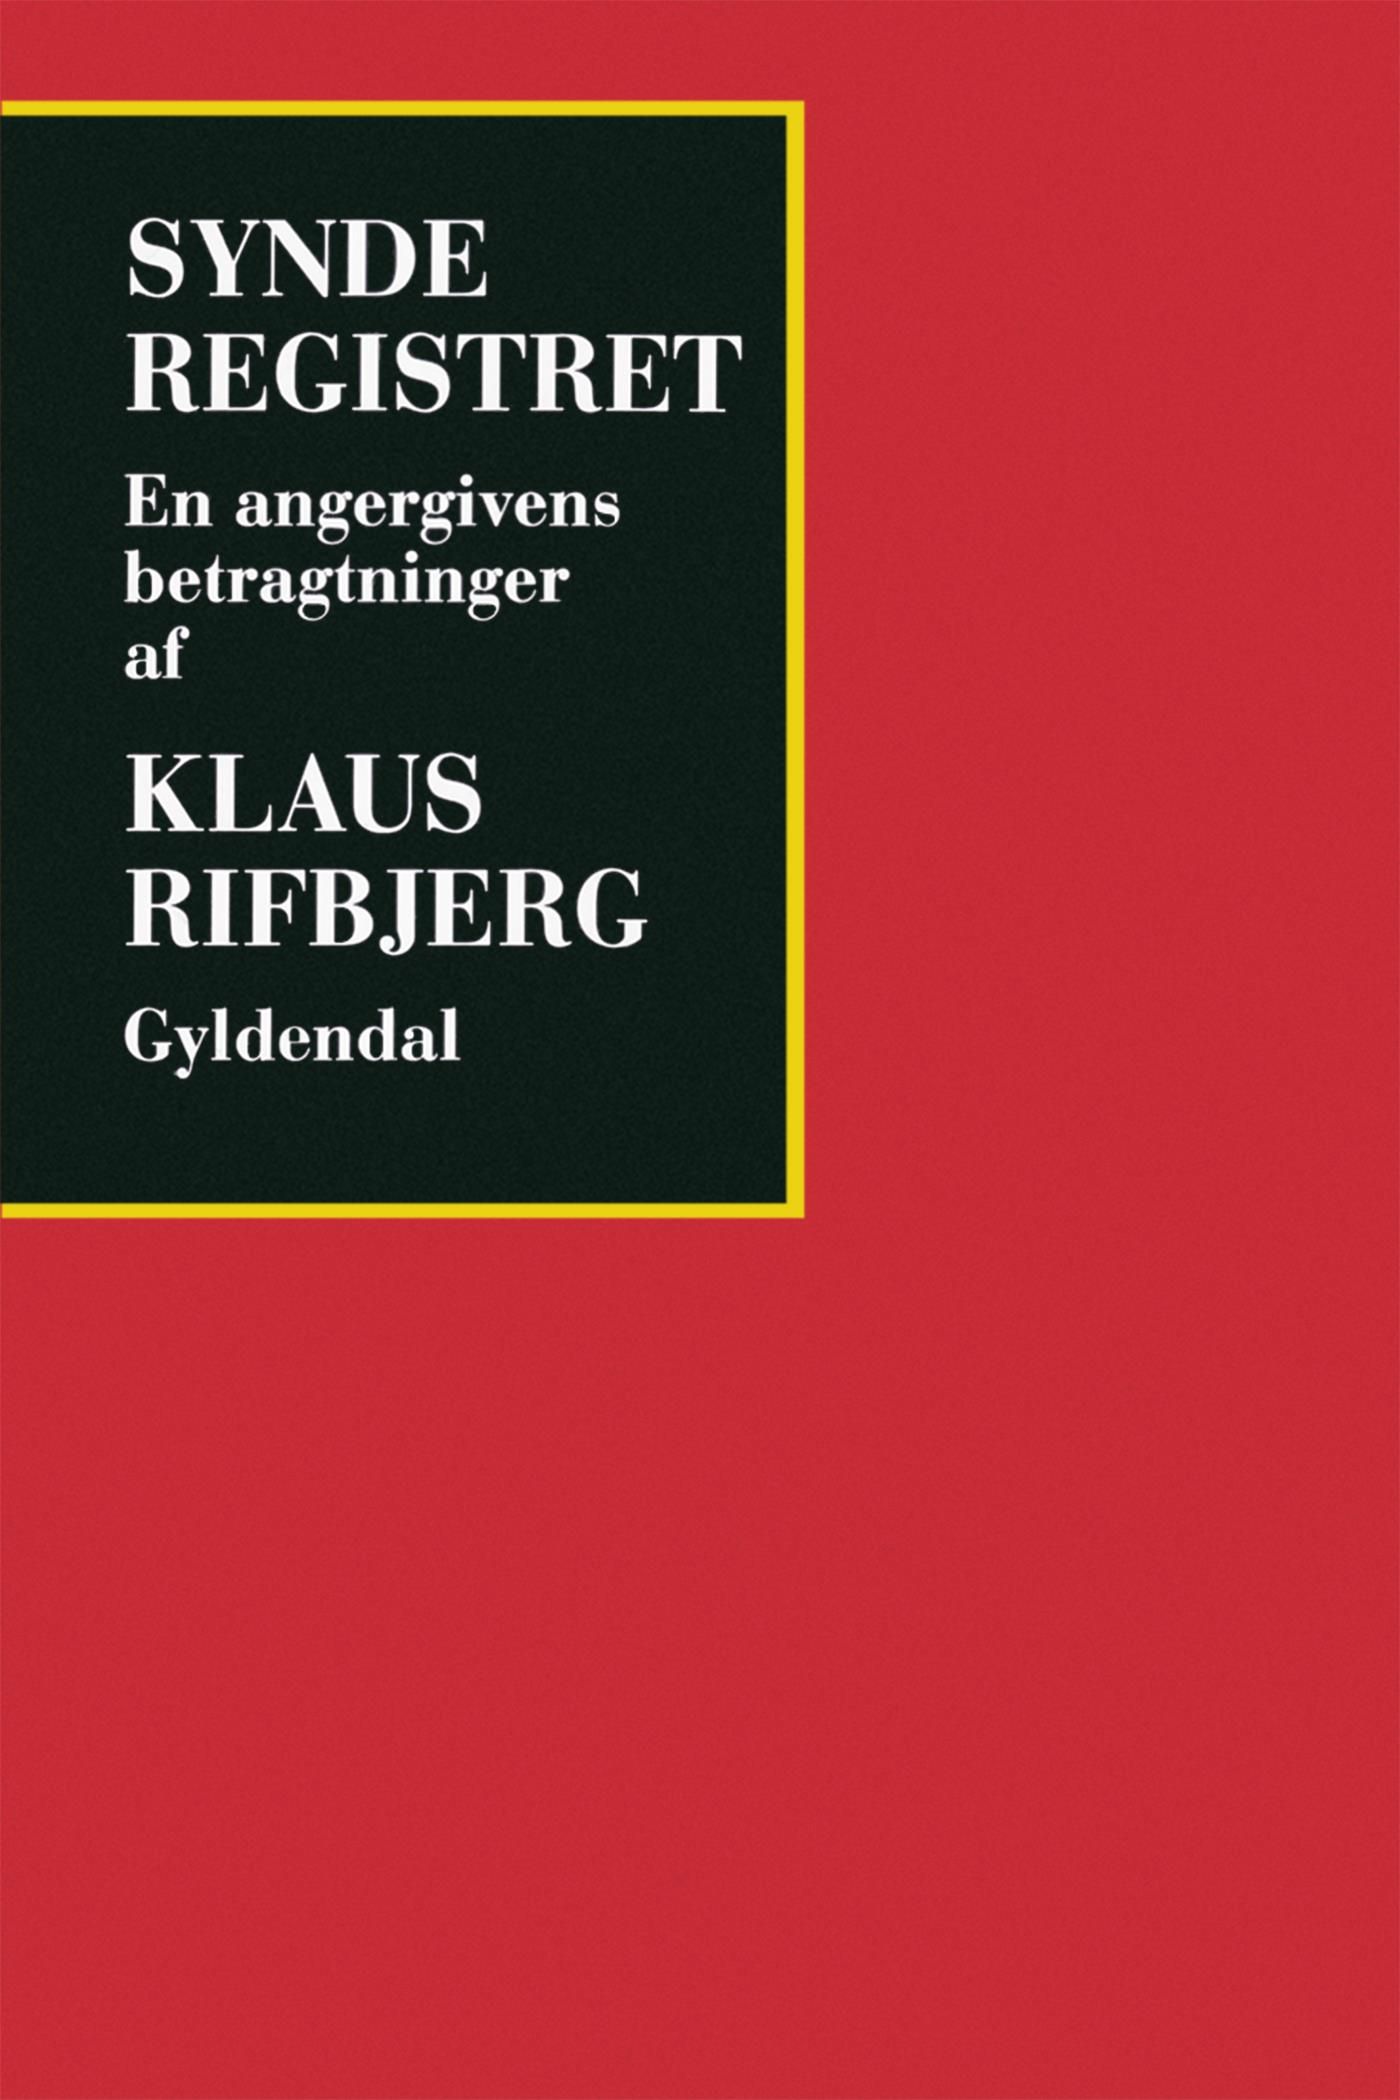 Synderegistret, eBook by Klaus Rifbjerg